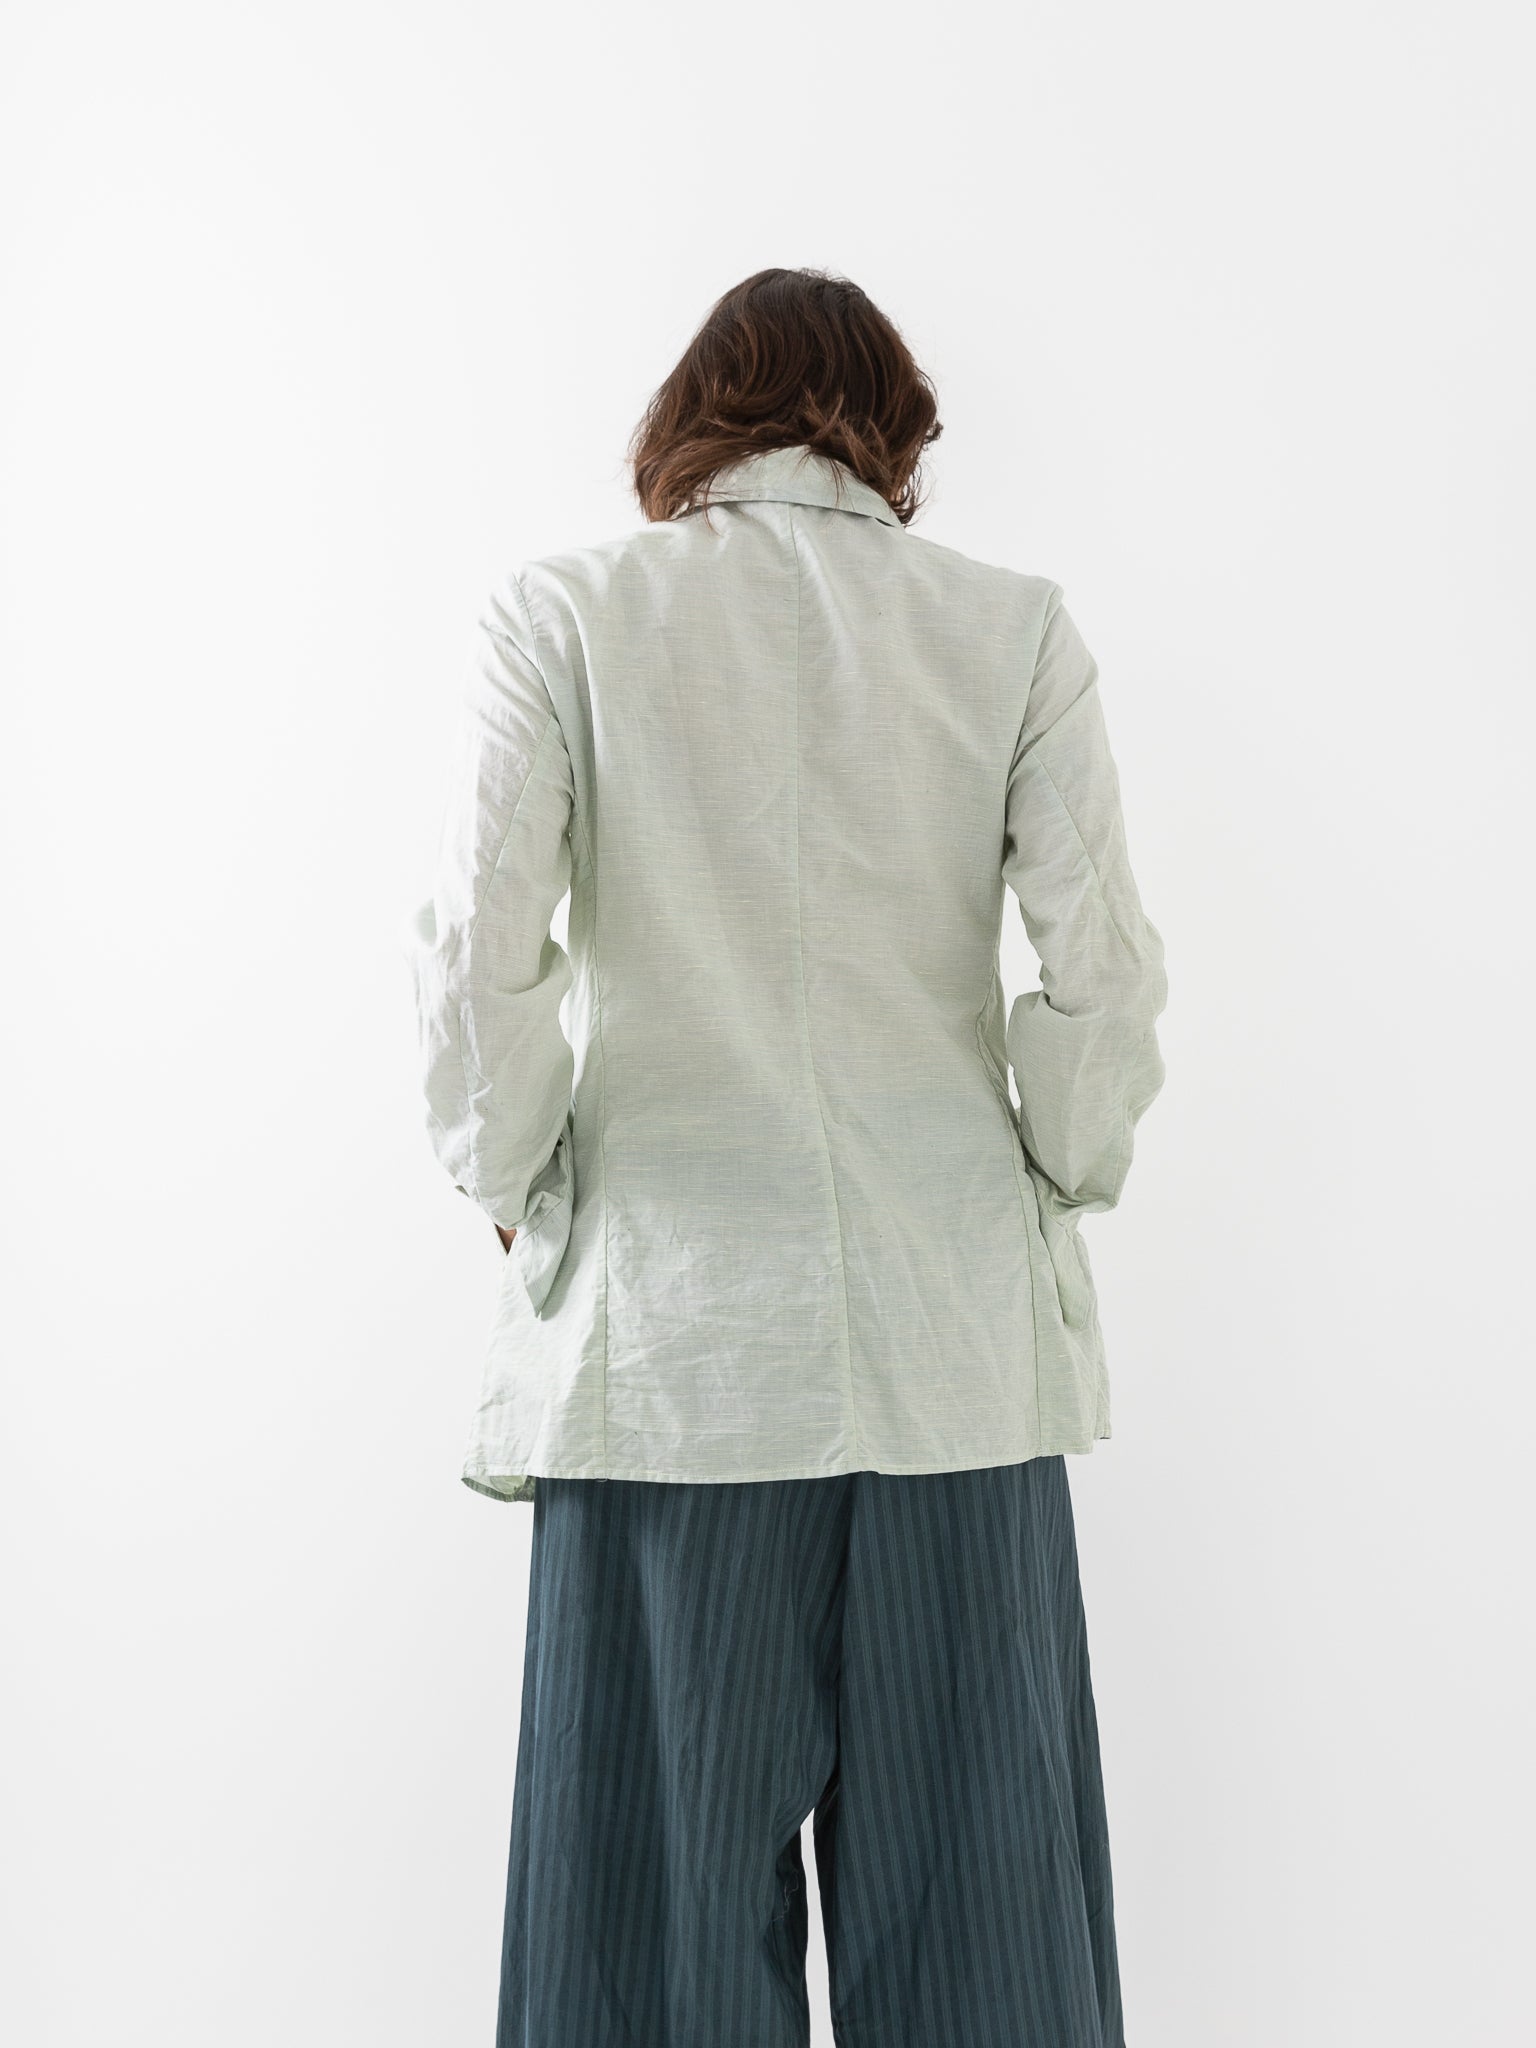 Atelier Suppan Shirt Jacket, Light - Worthwhile